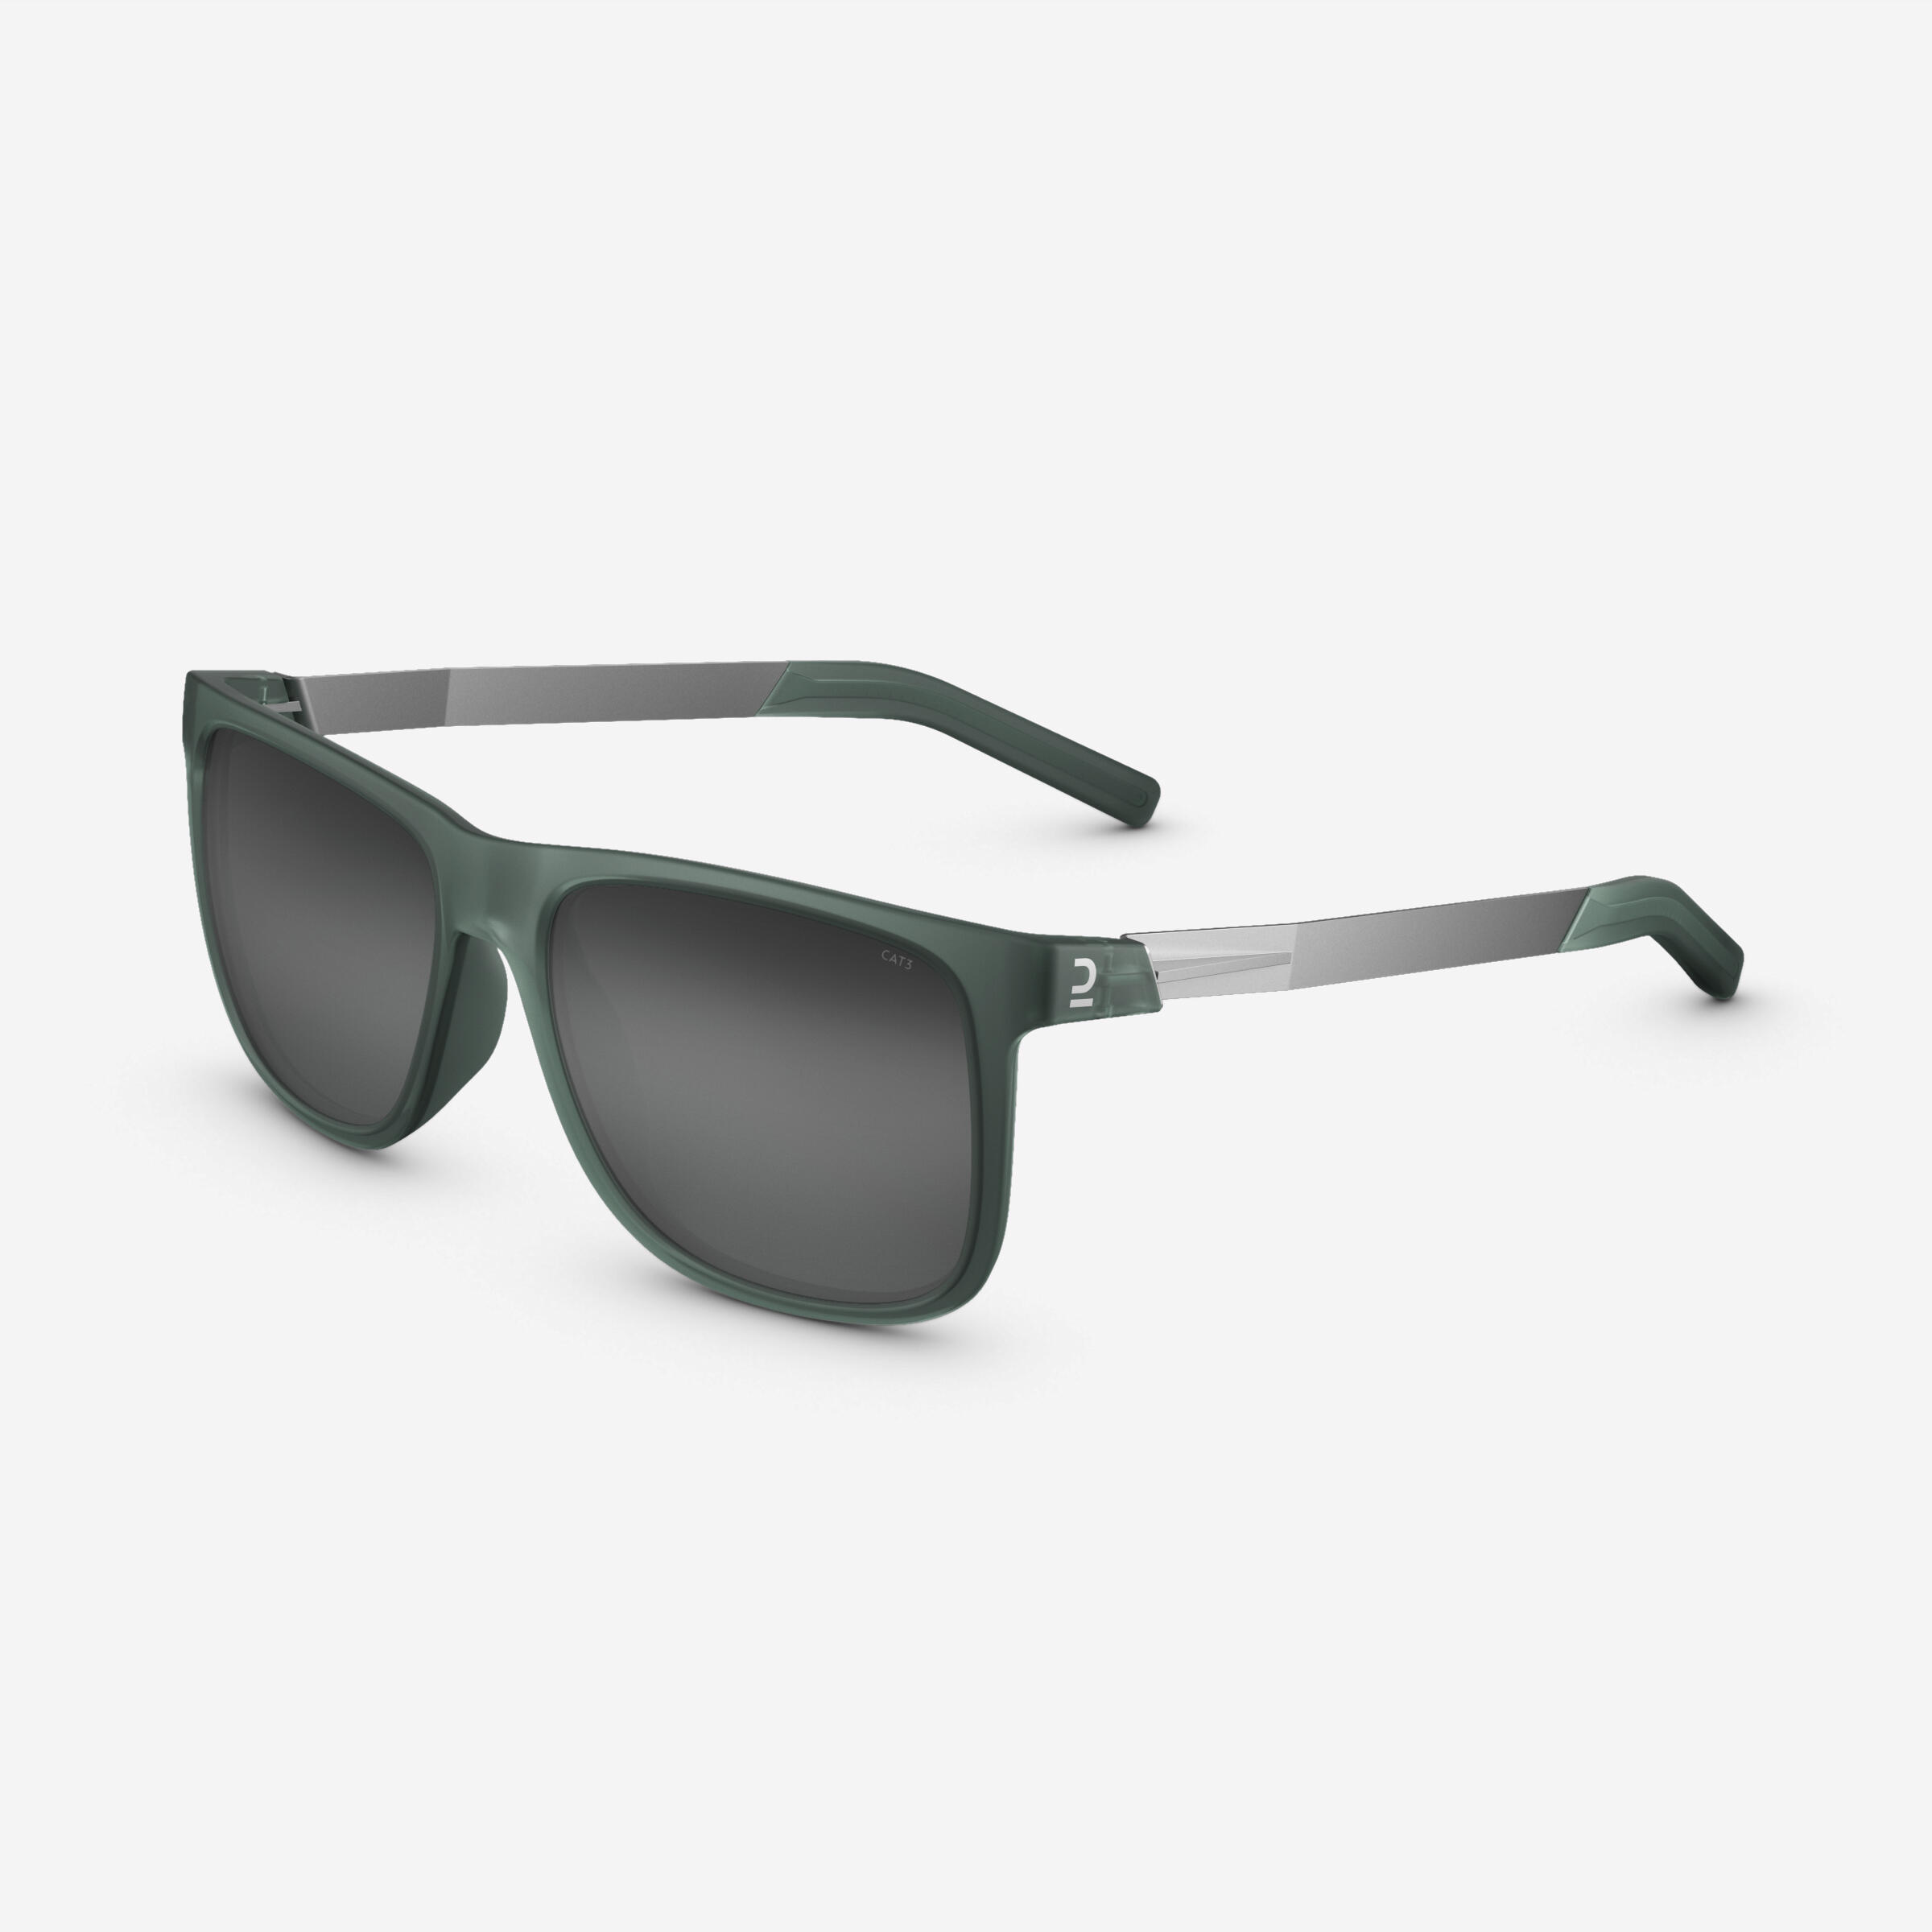 QUECHUA Sunglasses MH 140 Premium Cat 3 - Green